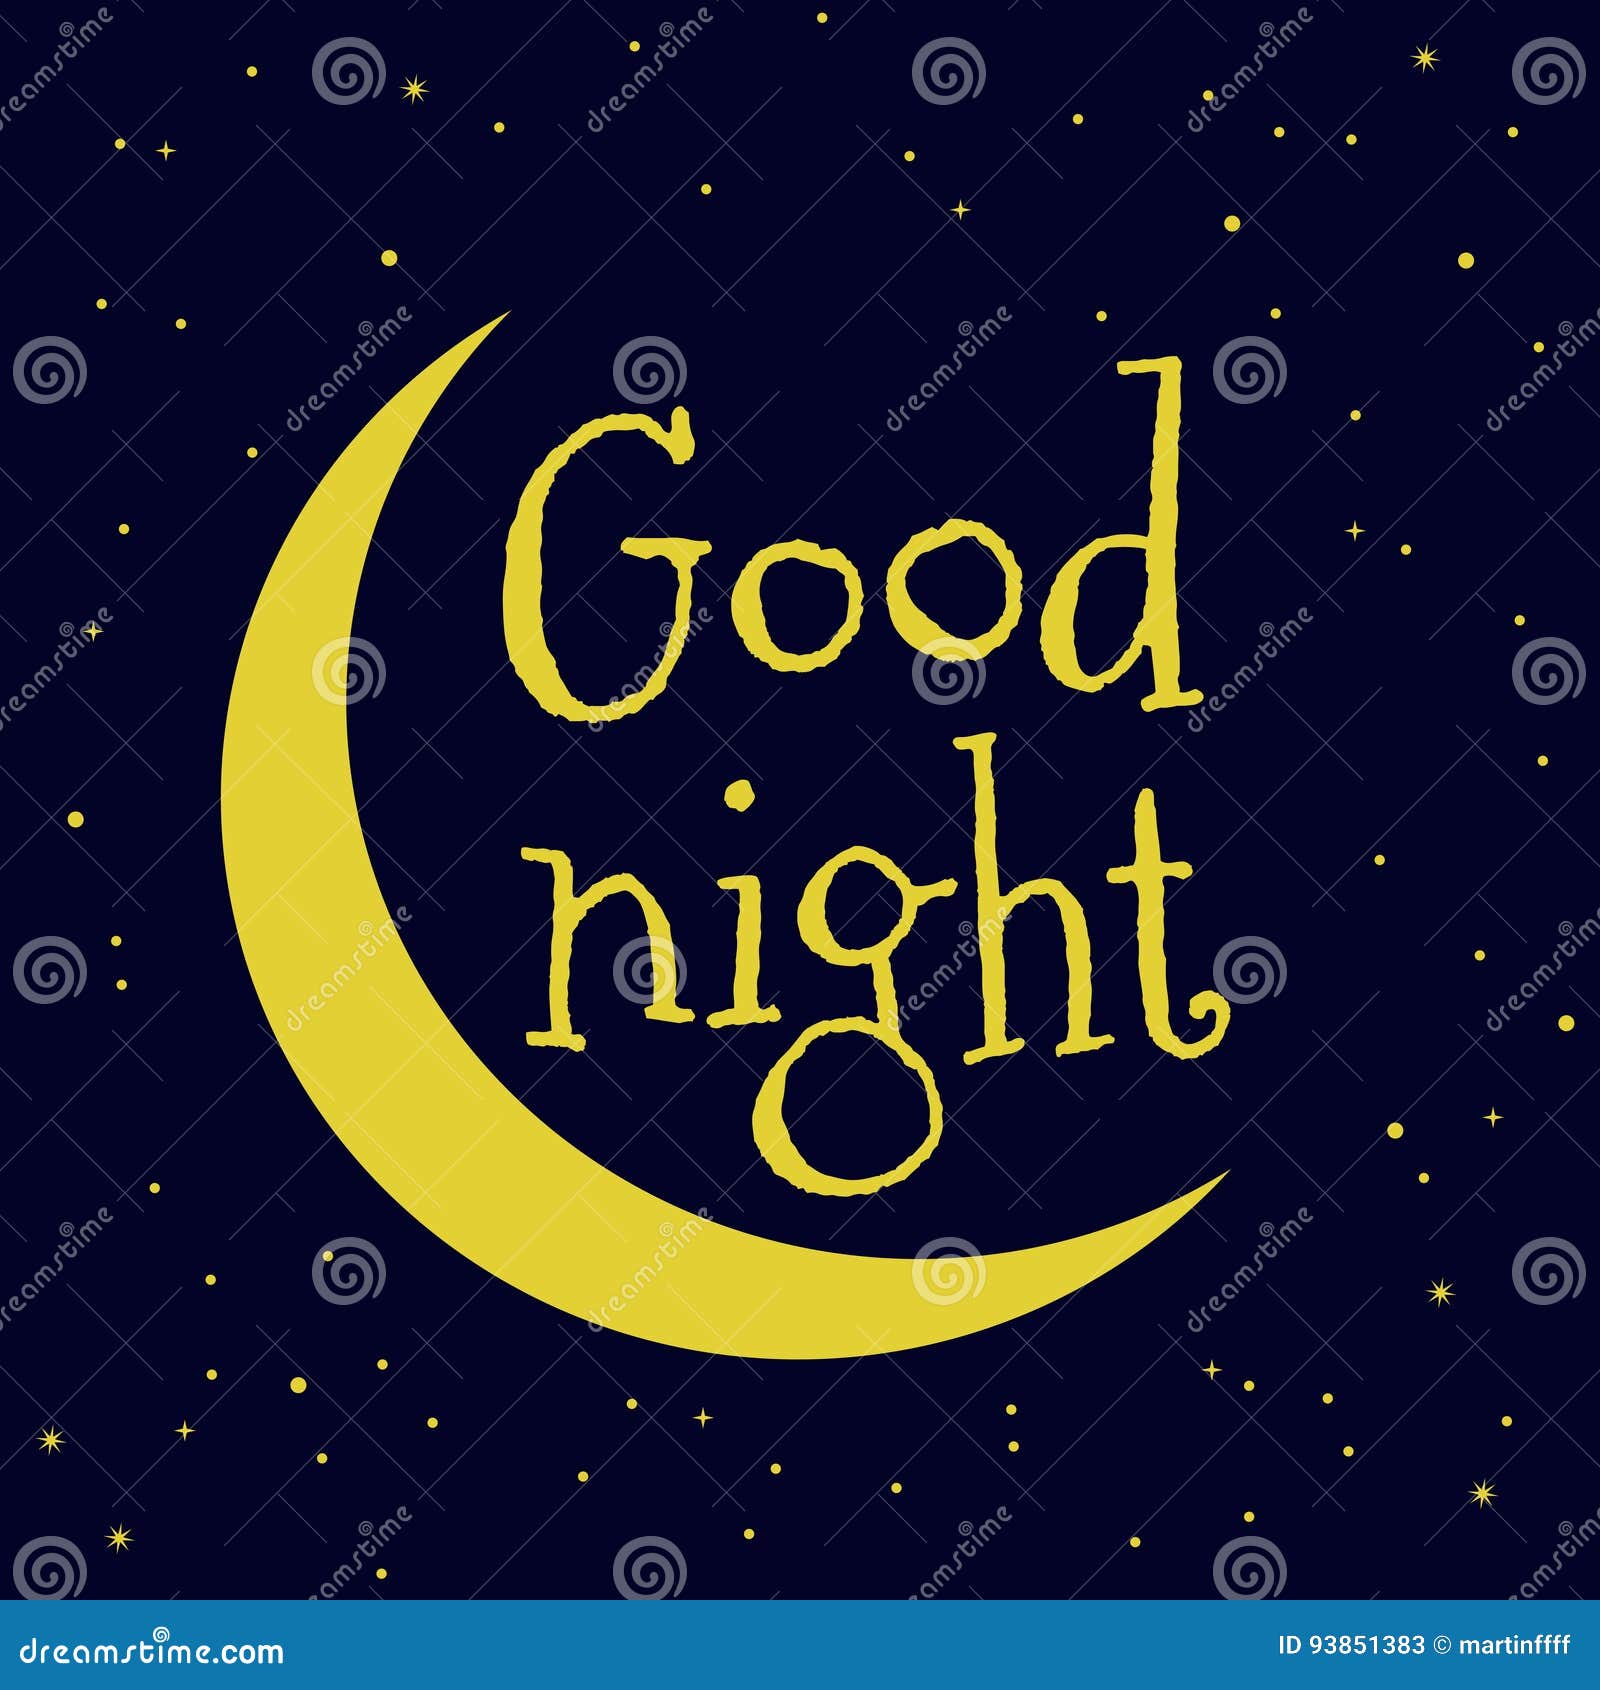 Good Night Vector - Yellow Moon and Stars on Dark Blue Sky Stock Vector ...